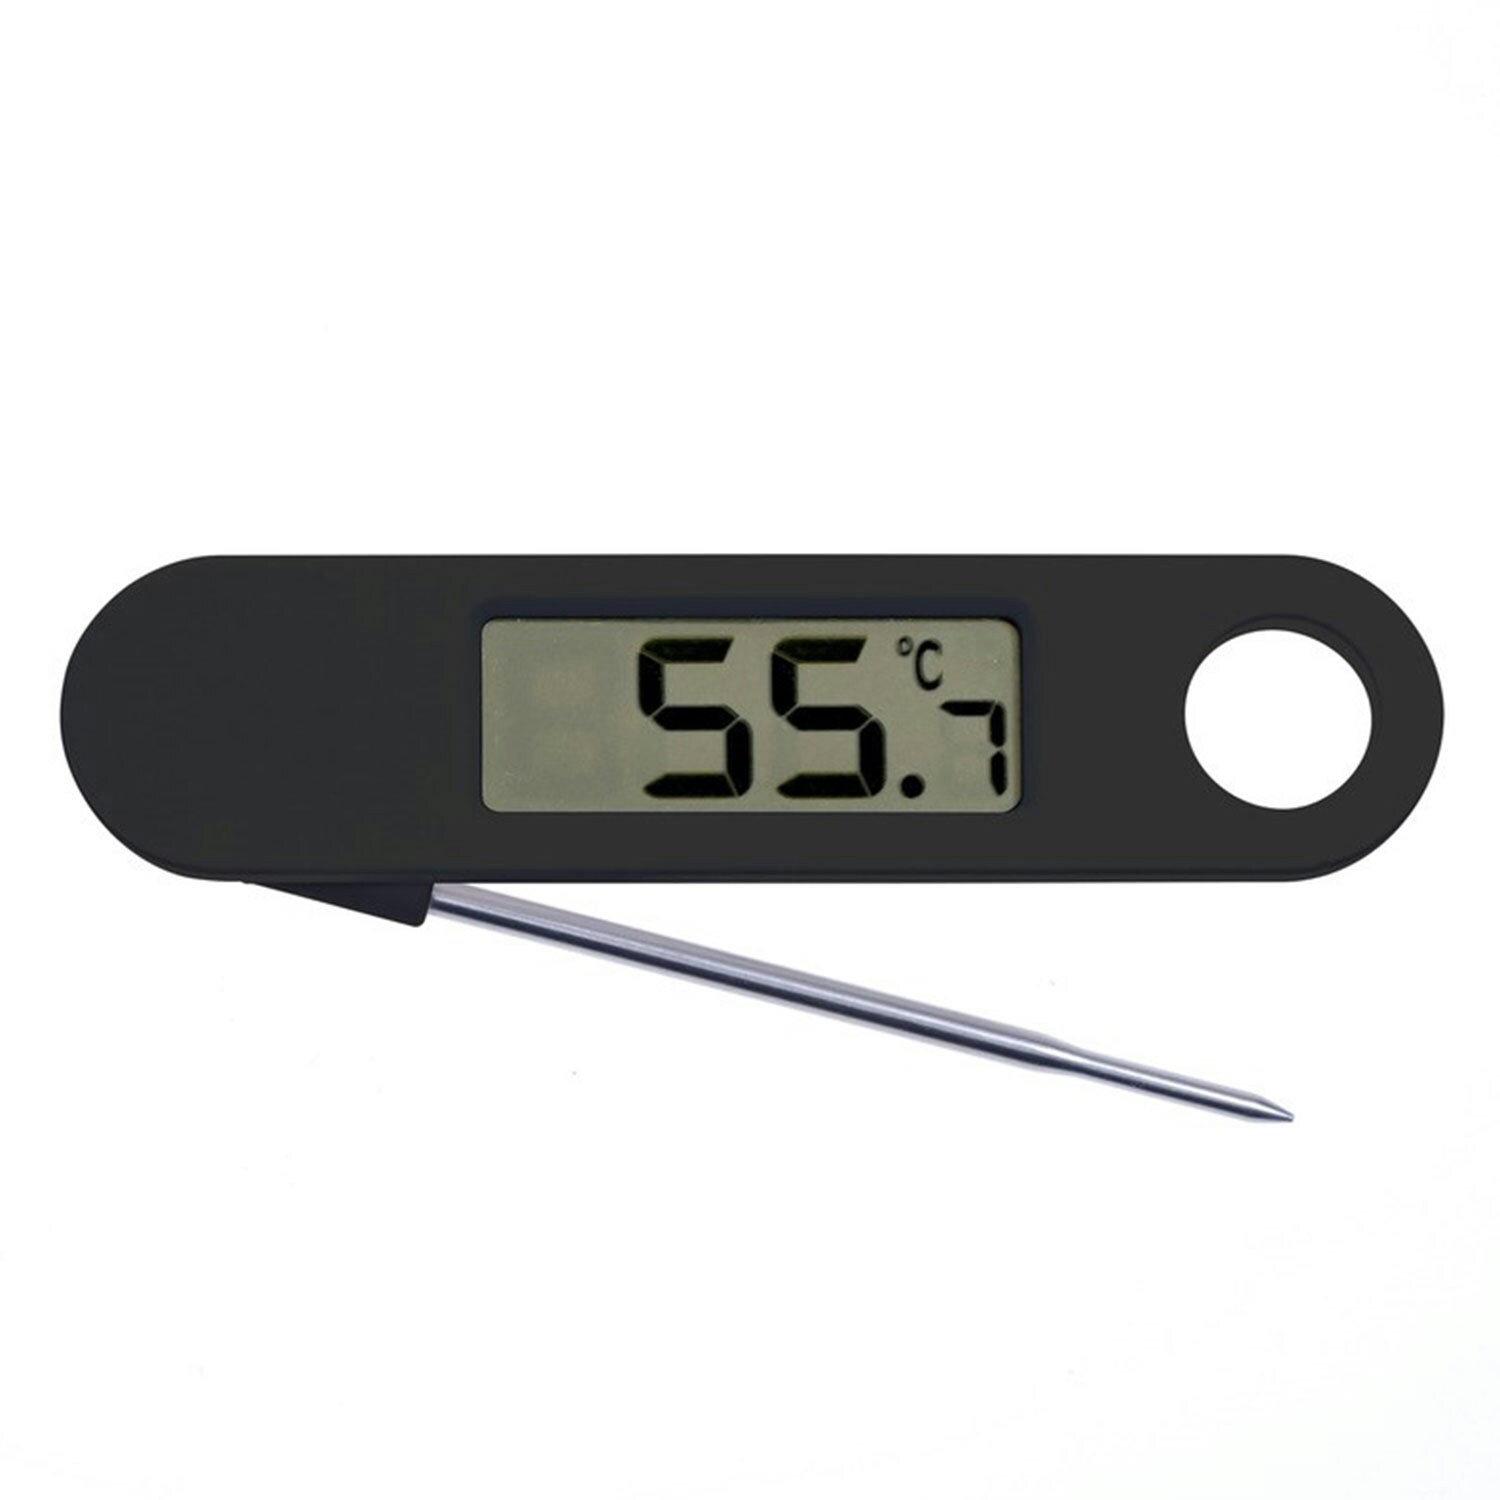 https://royaldesign.com/image/2/bengt-ek-design-universal-thermometer-0-250c-1